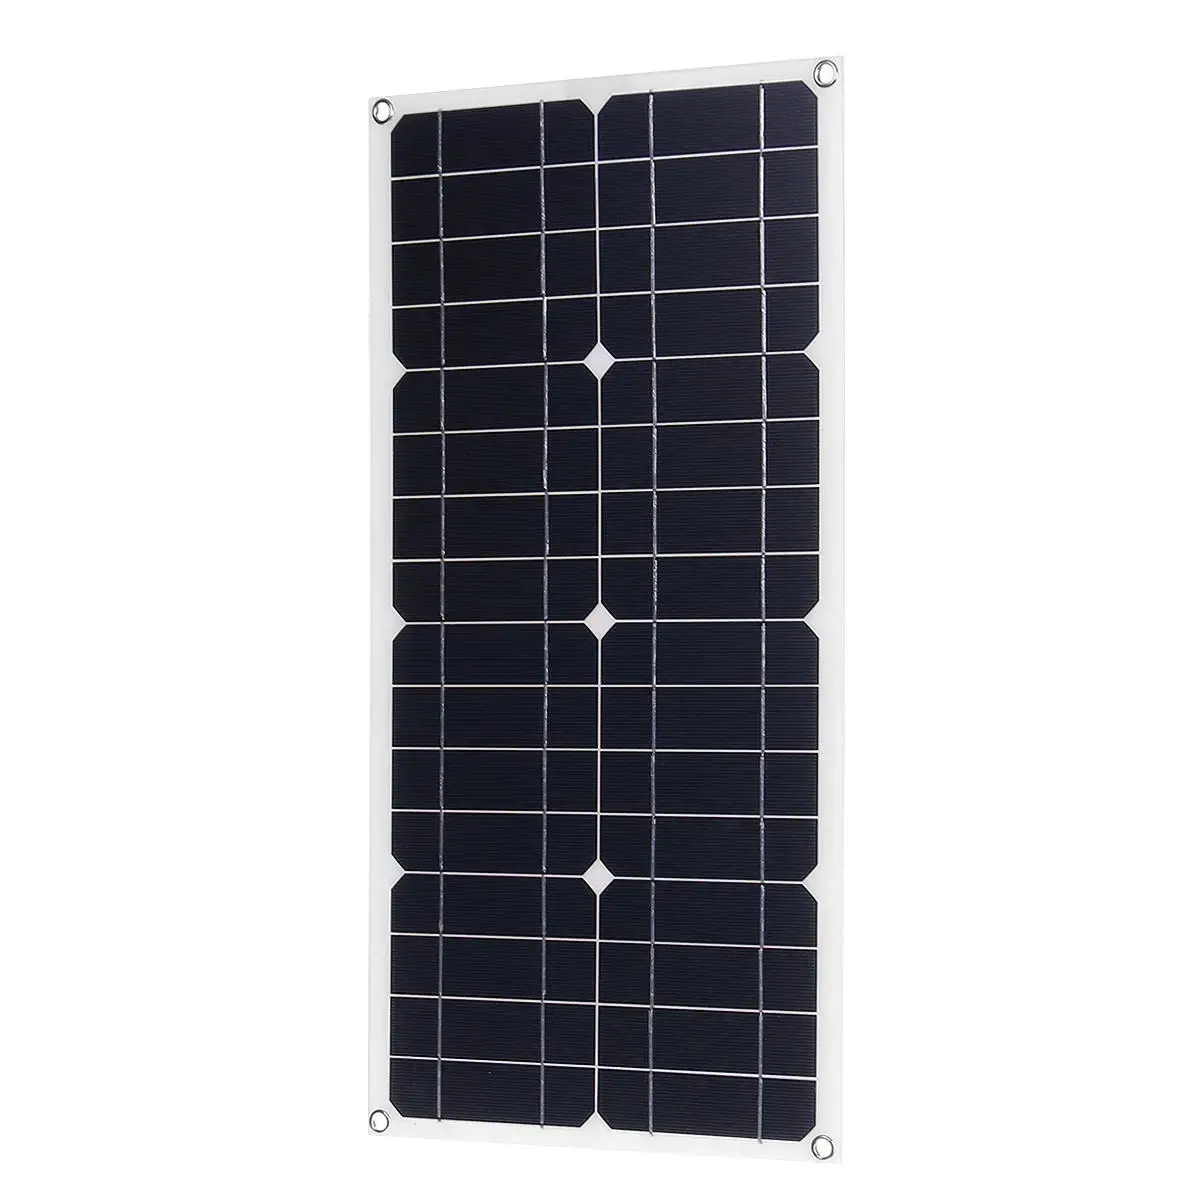 Kit Panel surya fleksibel, modul pengisi daya surya silikon monokristalin 30W 18V IP65 tahan air panneau solaire